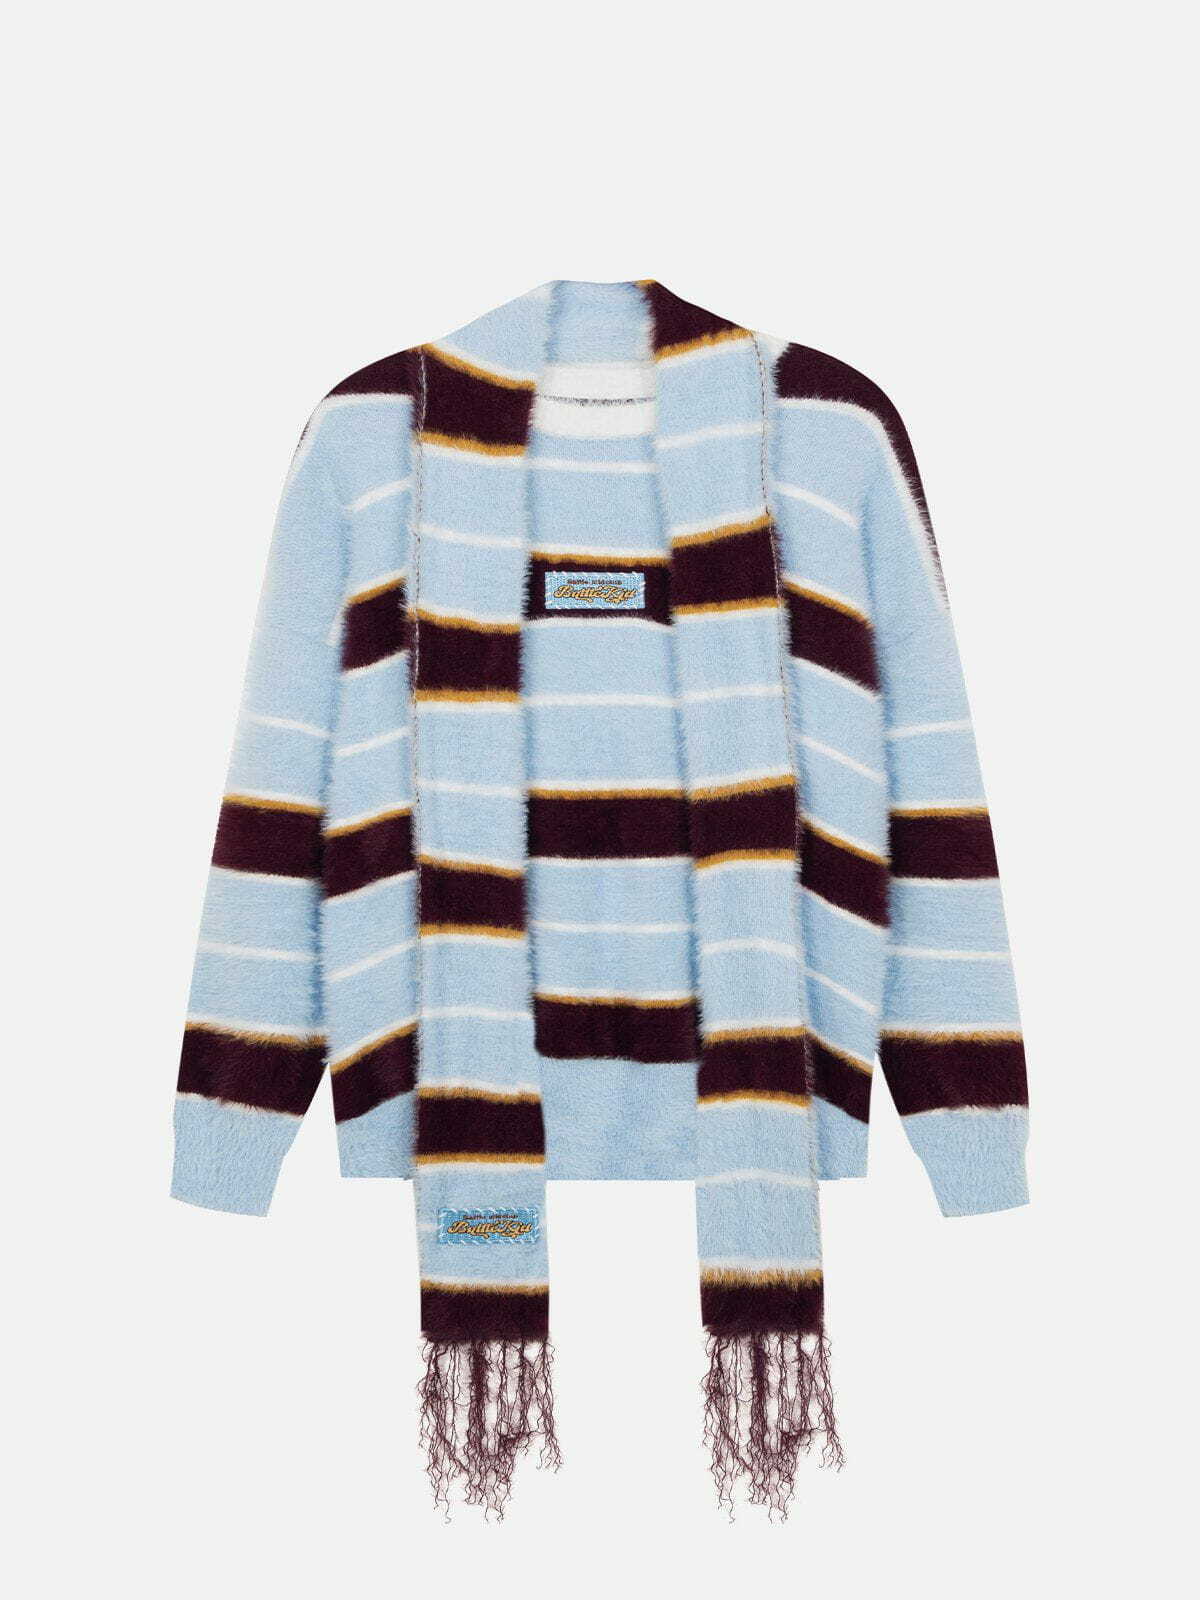 colorful striped knit sweater retro chic statement 8959